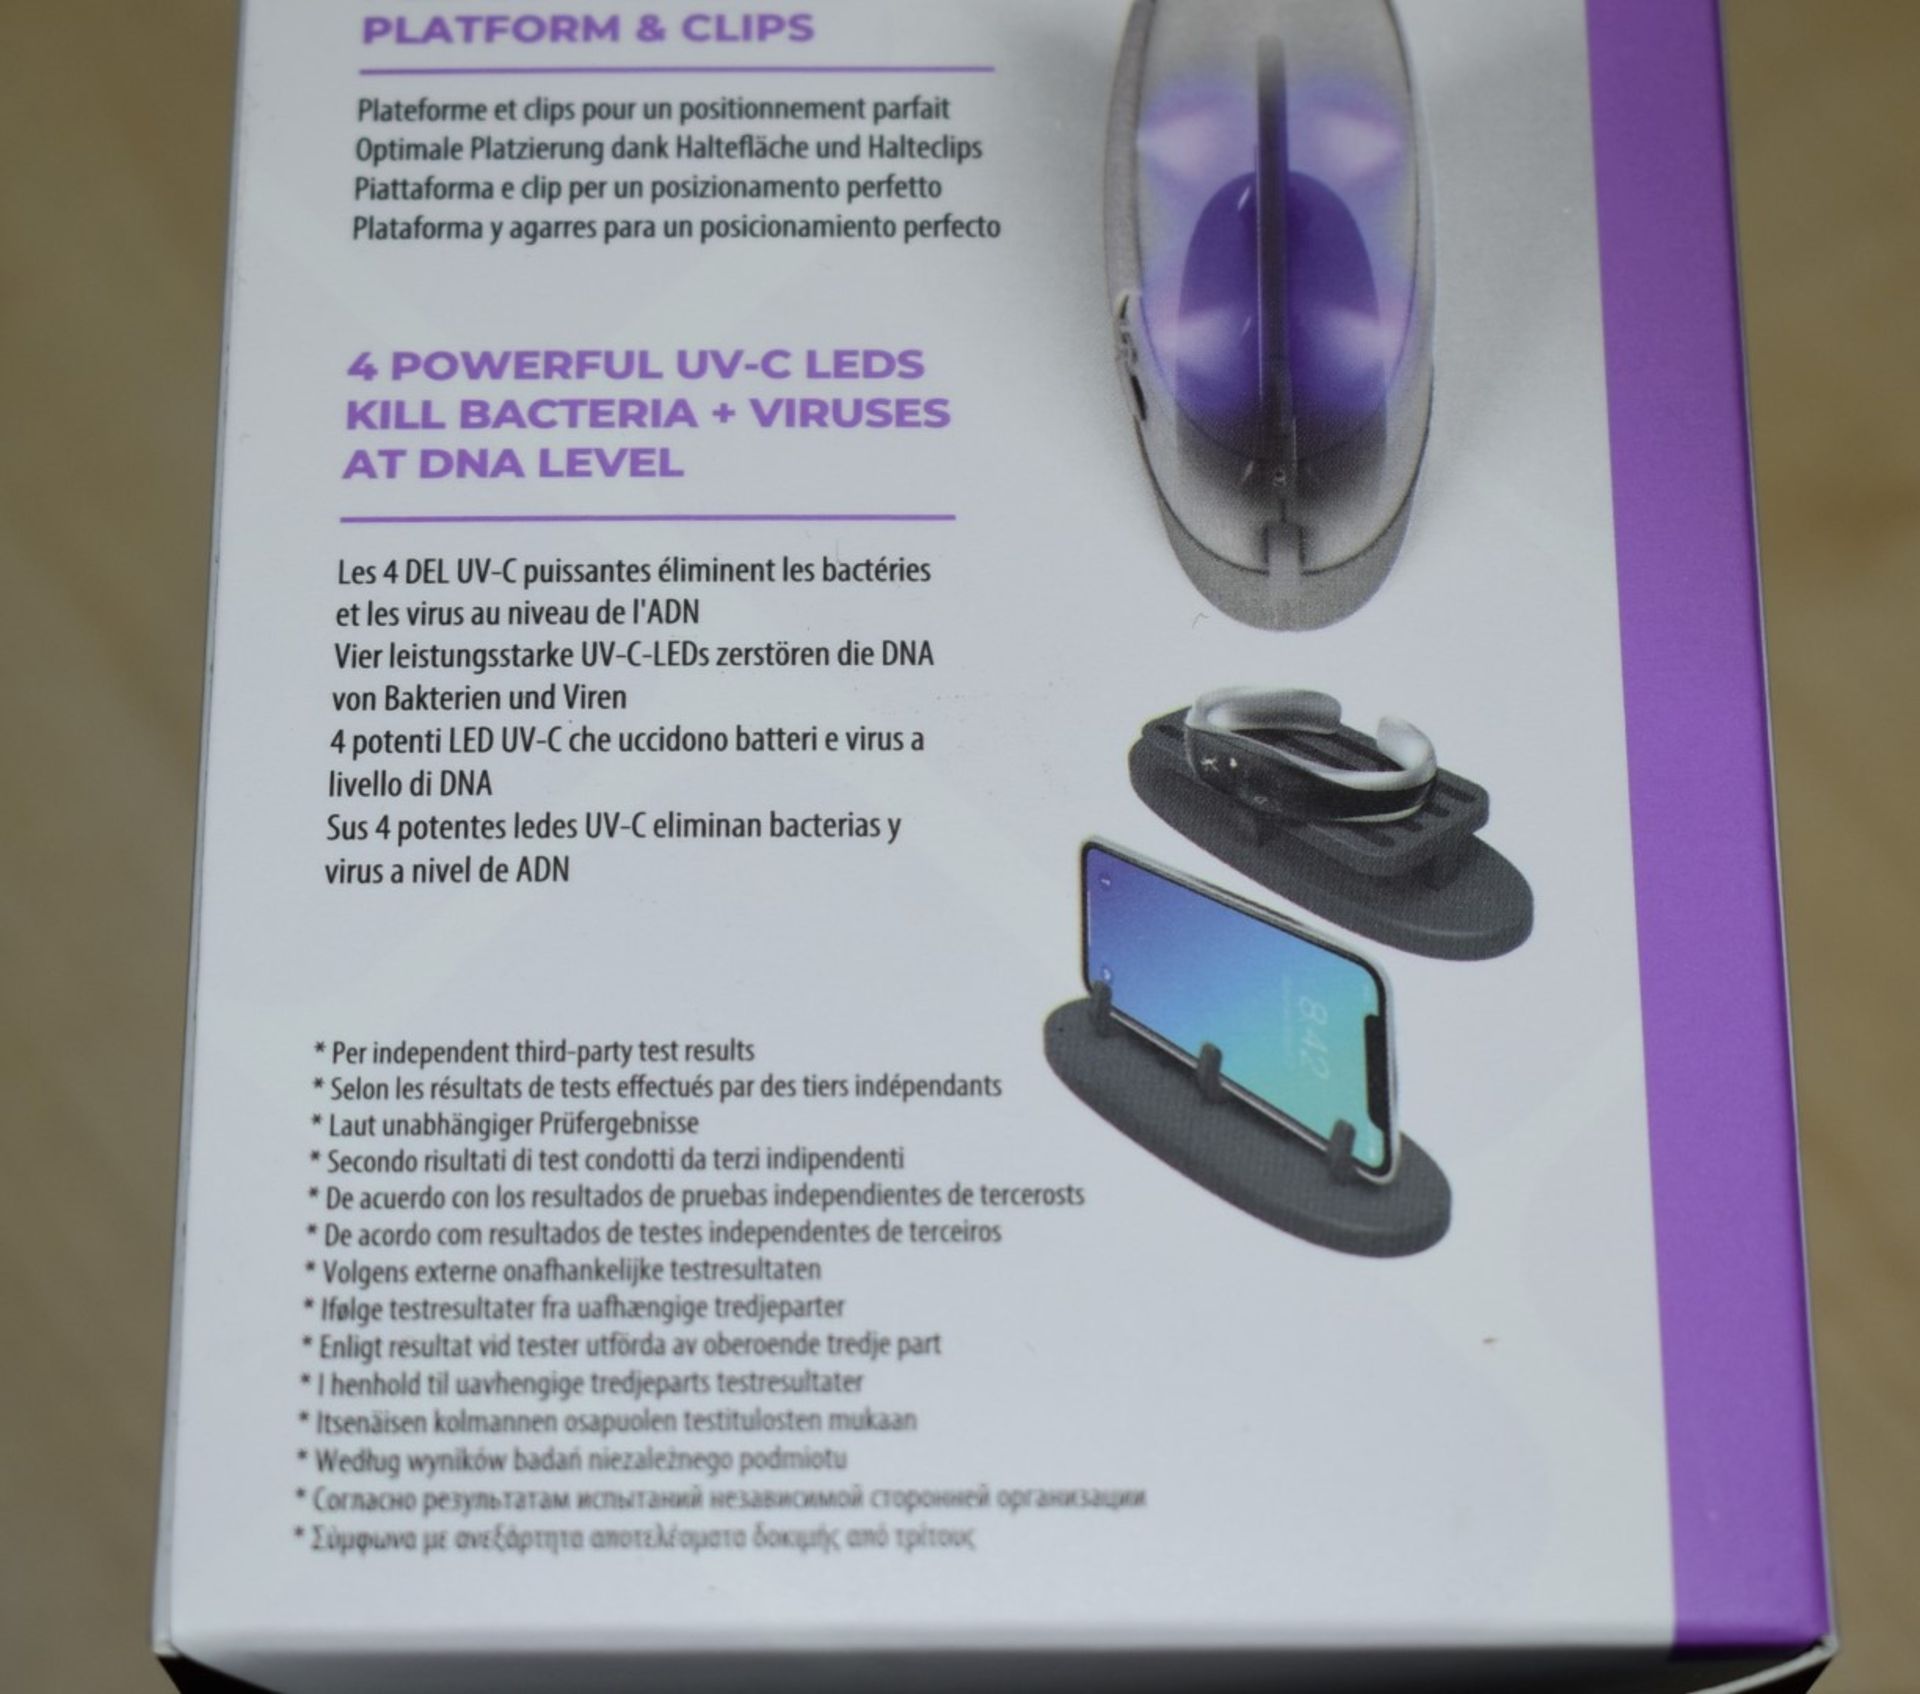 4 x Homedics UV Clean Portable Sanitiser Bags - Kills Upto 99.9% of Bacteria & Viruses in Just 60 - Image 11 of 19